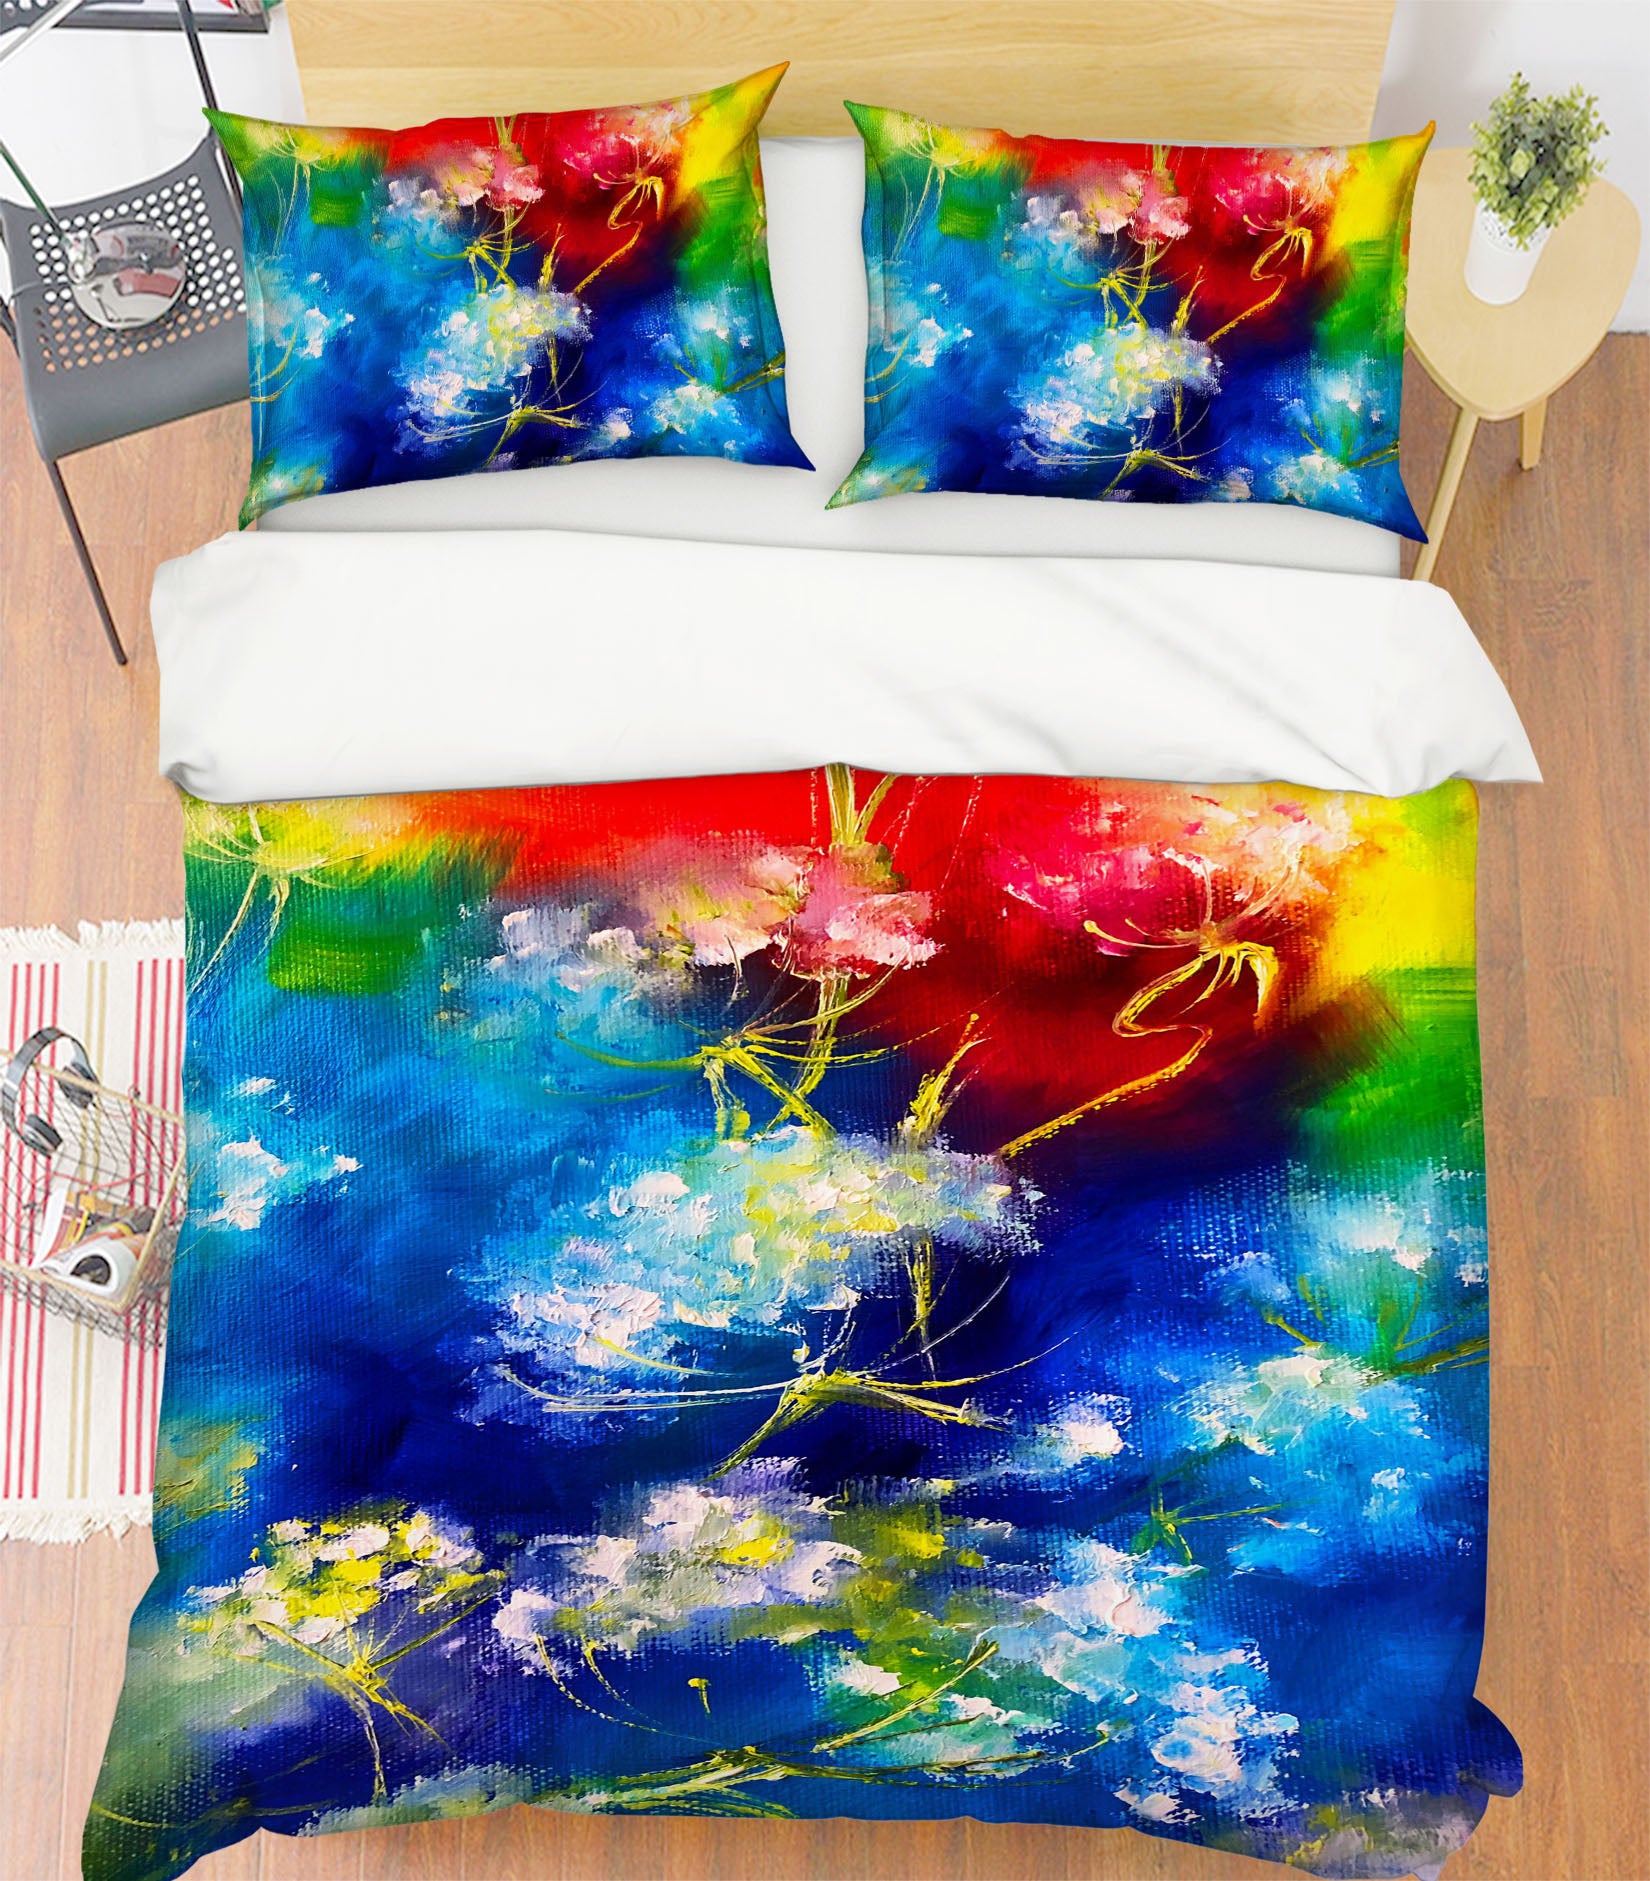 3D Blue Flower 620 Skromova Marina Bedding Bed Pillowcases Quilt